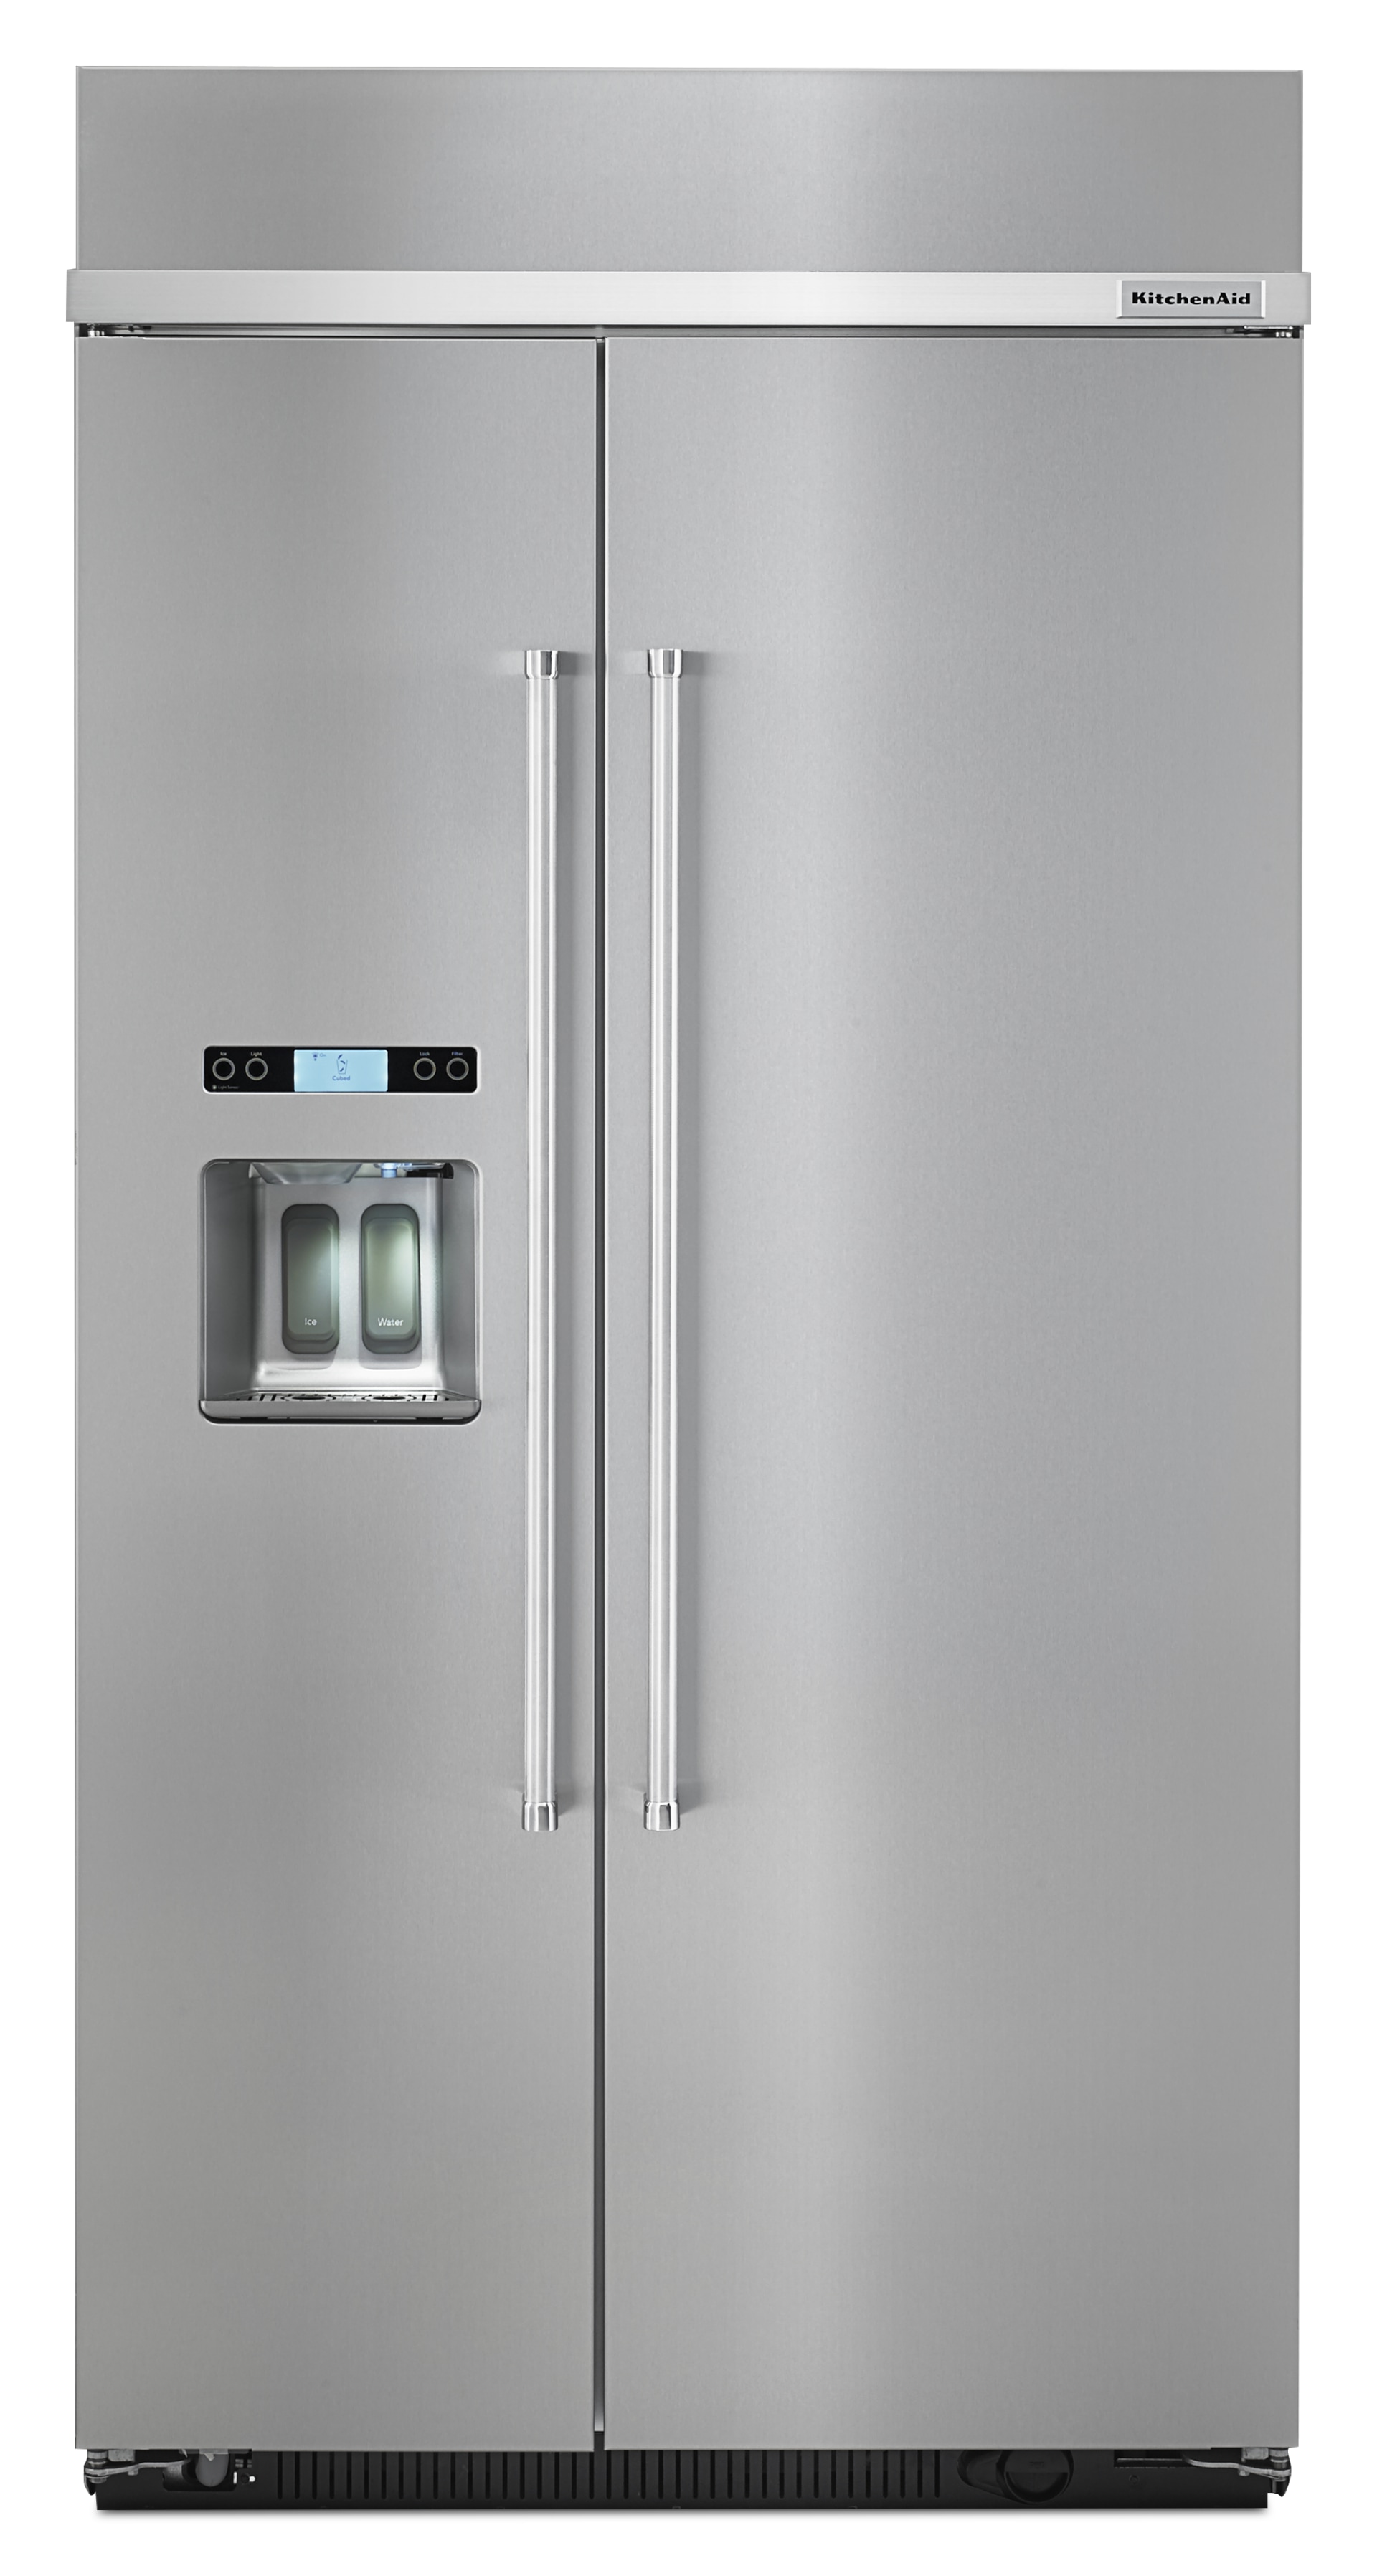 10++ Kitchenaid refrigerator vacation mode information